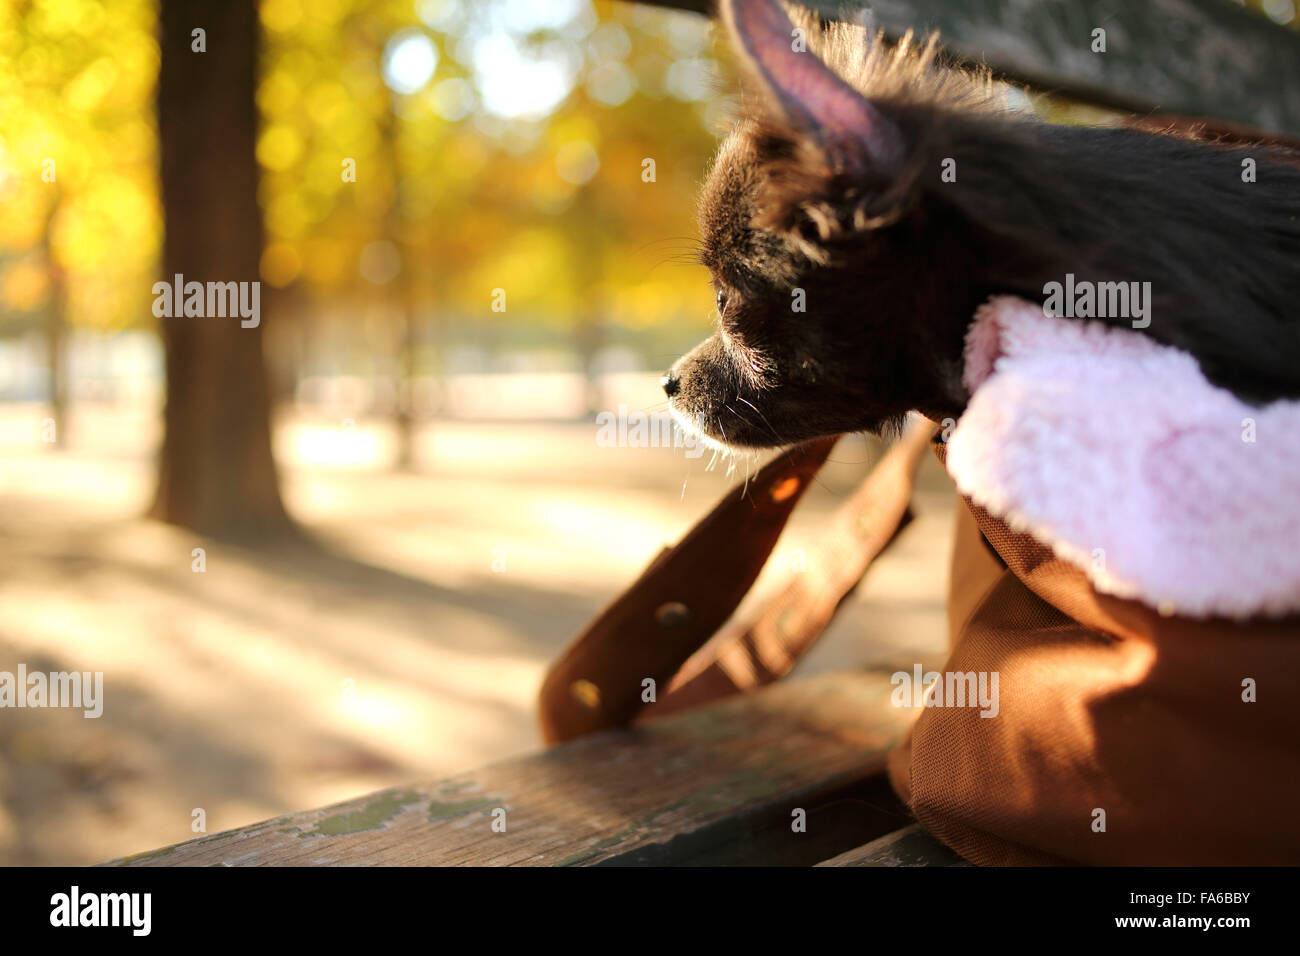 Chihuahua handbag hi-res stock photography and images - Alamy